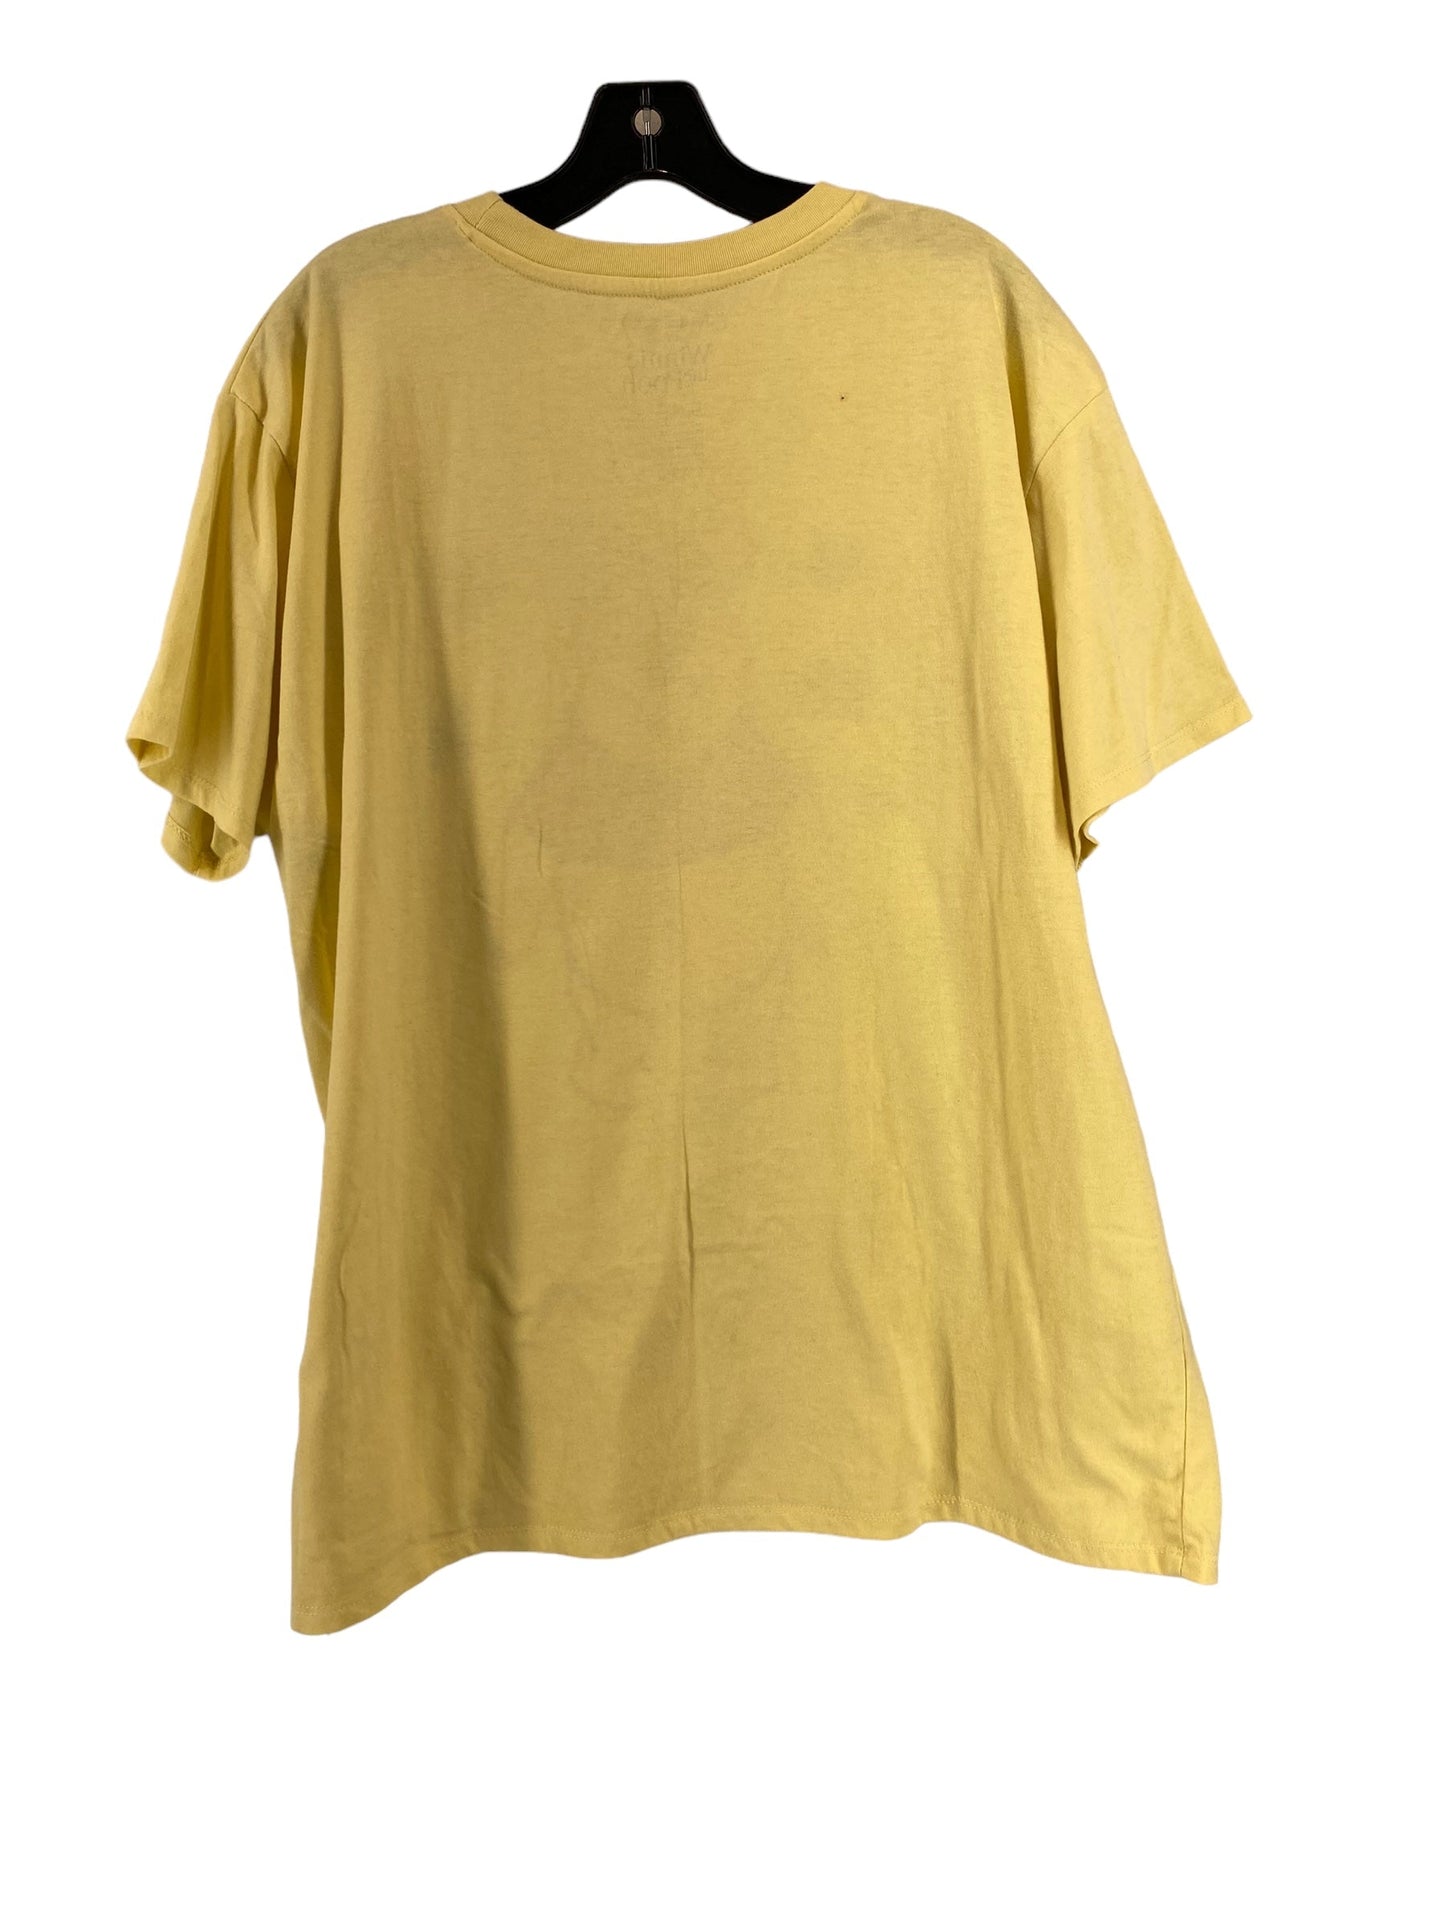 Yellow Top Short Sleeve Basic Disney Store, Size Xxl